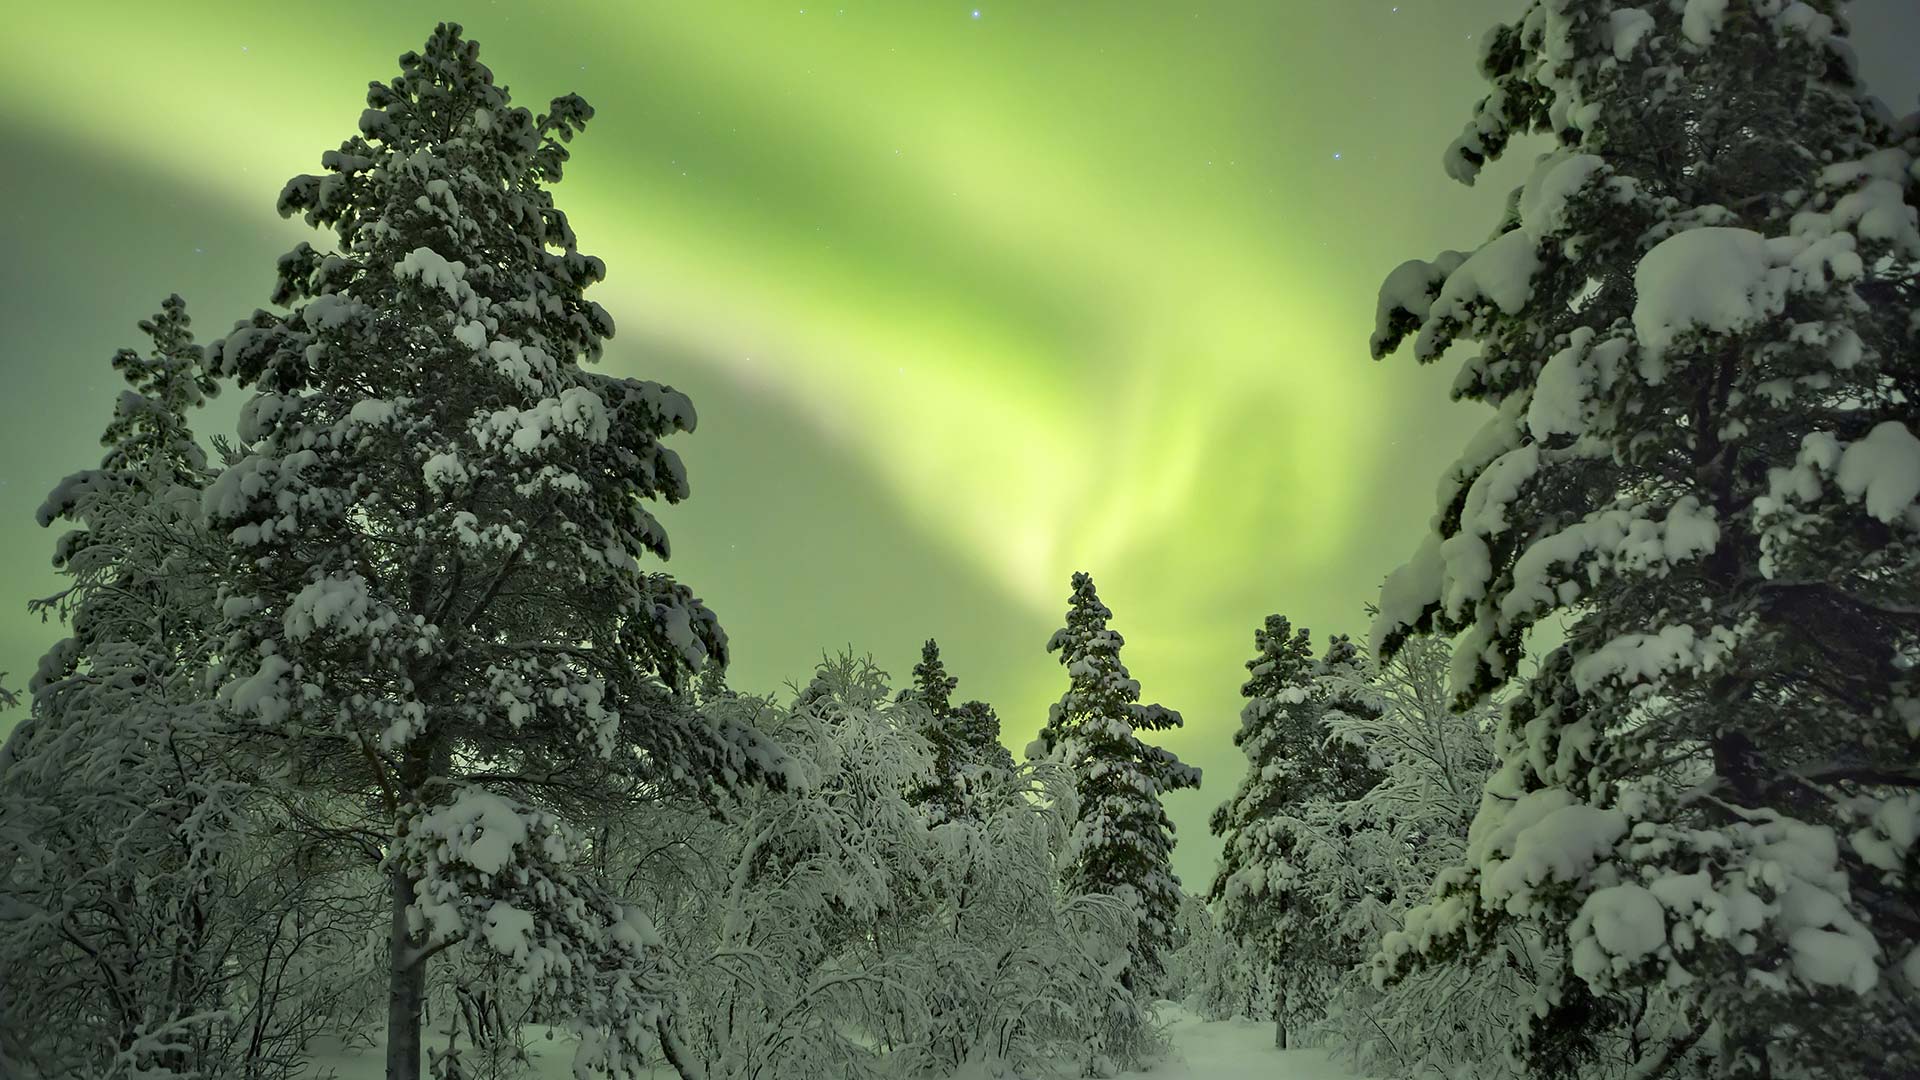 Northern lights in Finnish Lapland